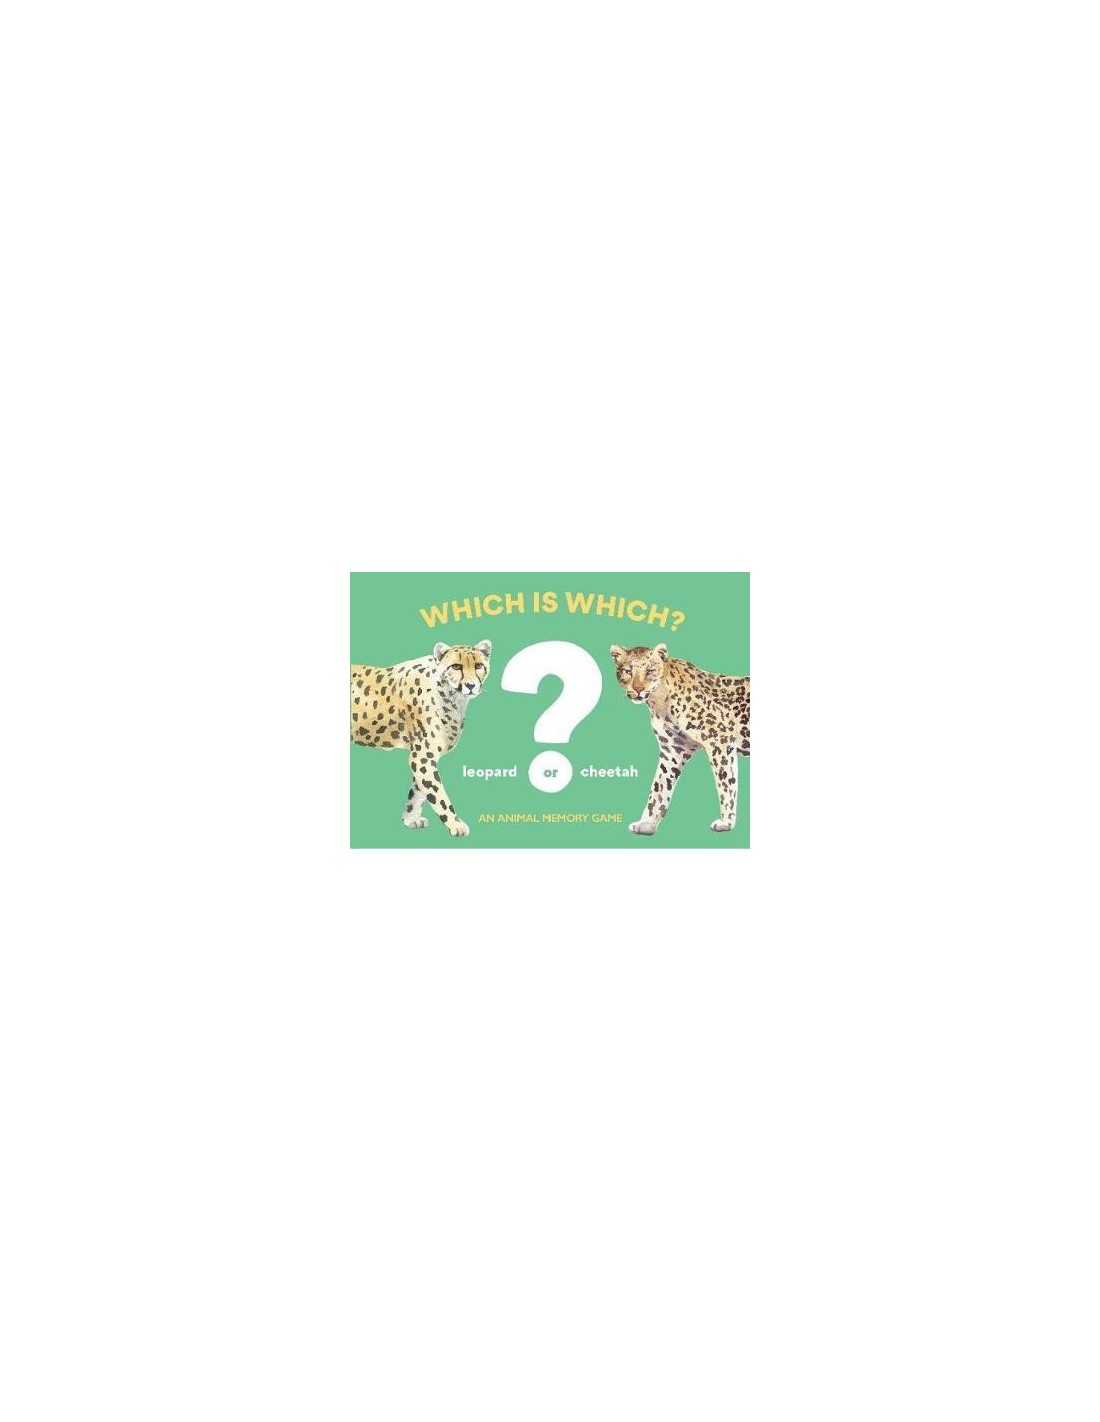 You Callin' Me a Cheetah? (Psst! I'm a Leopard!):An Animal Memory : An Animal Memory Game